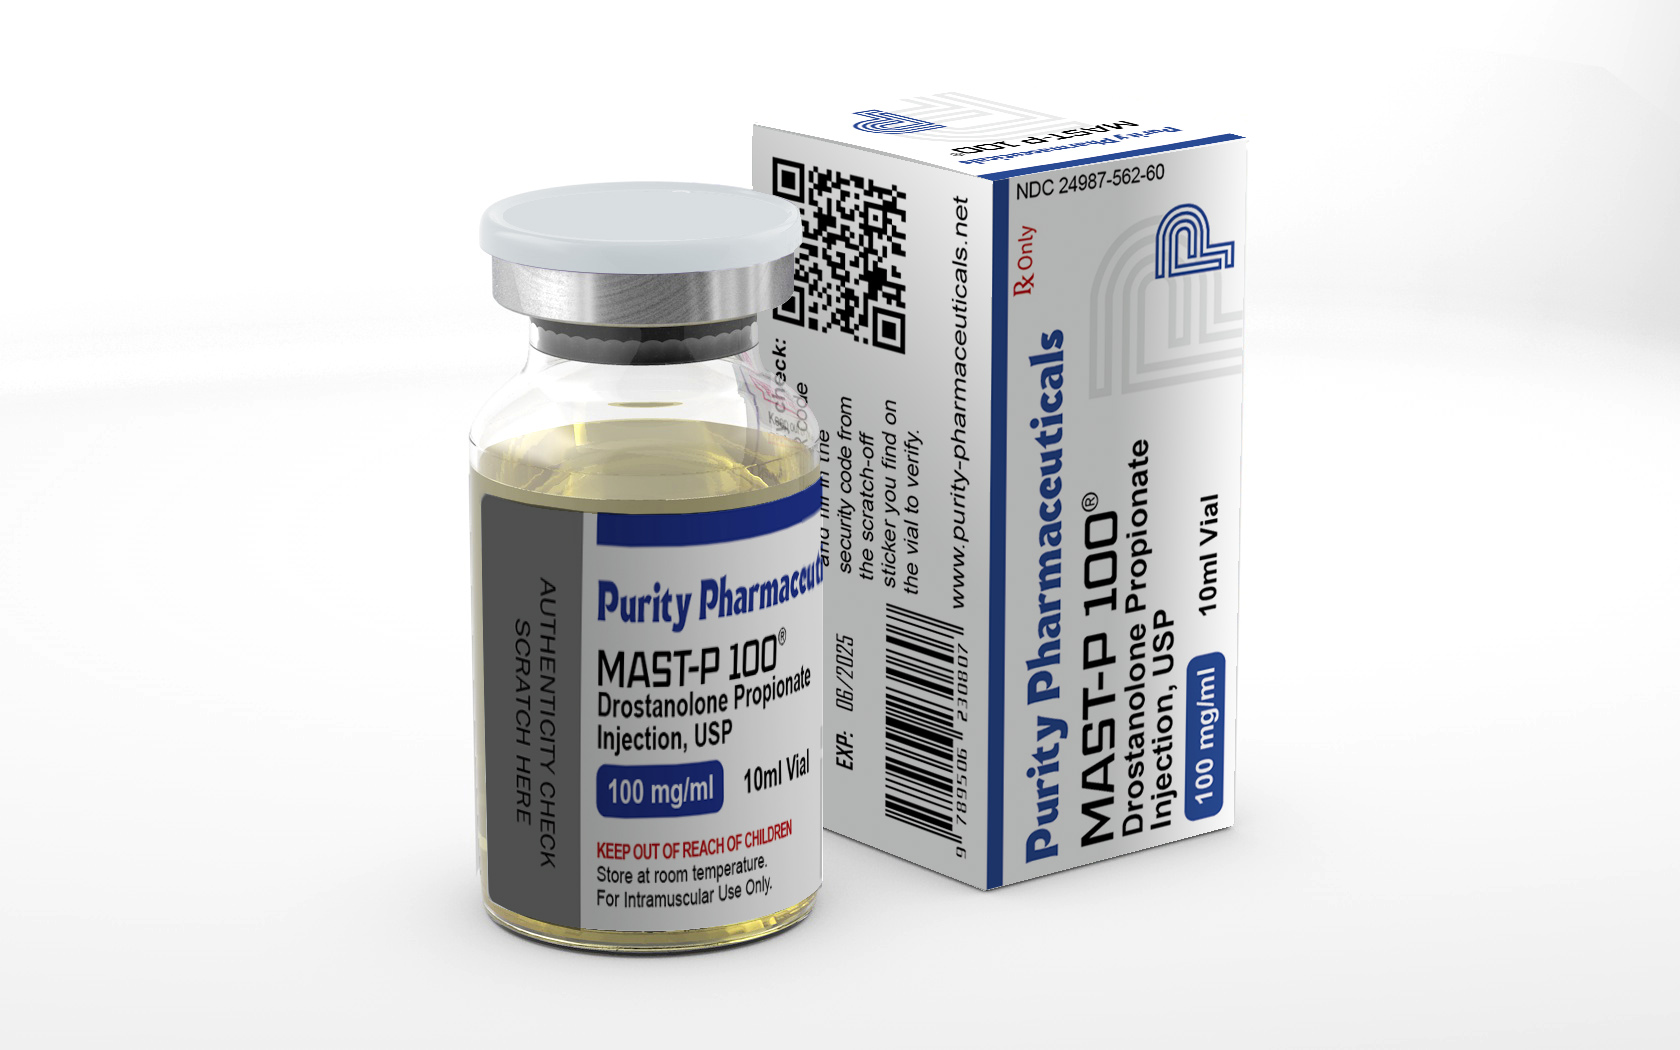 masteron propionate purity pharmaceuticals